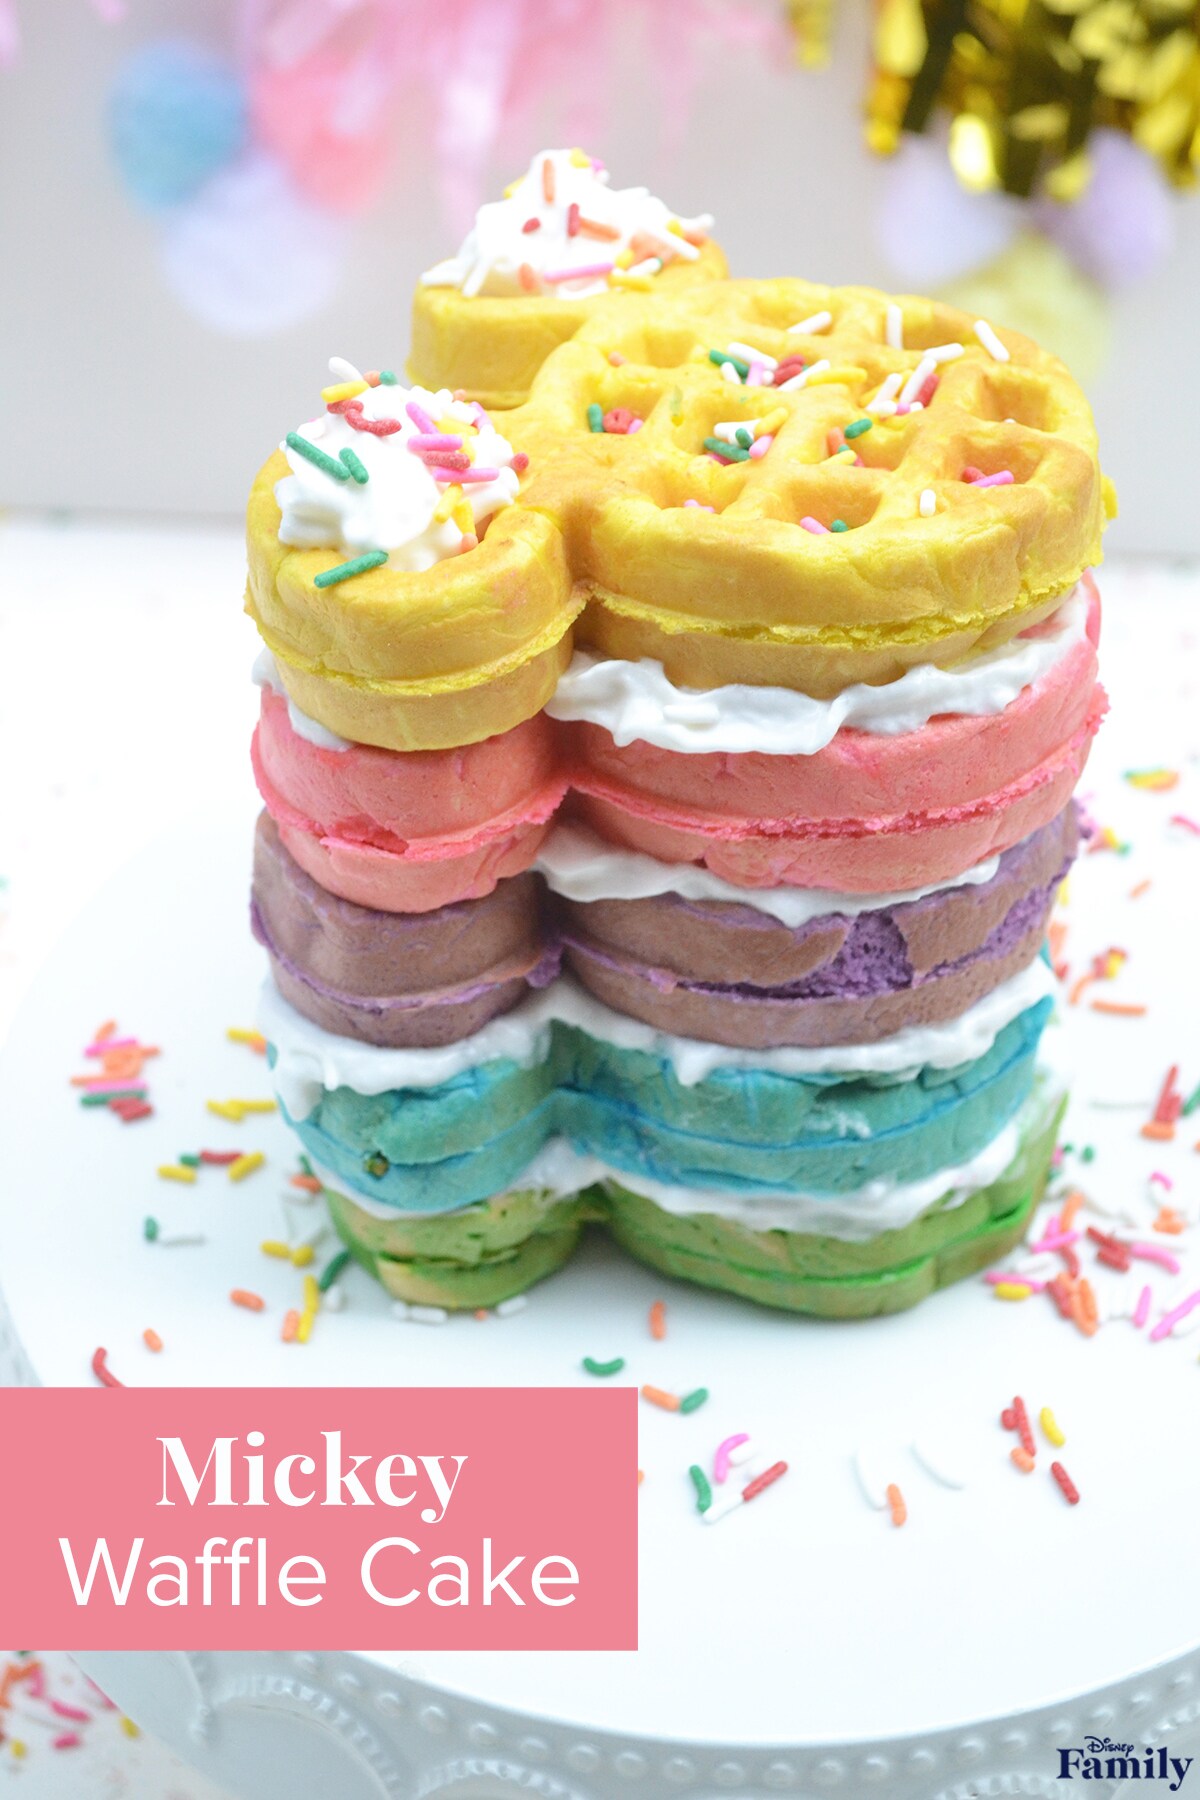 "Mickey Waffle Cake".